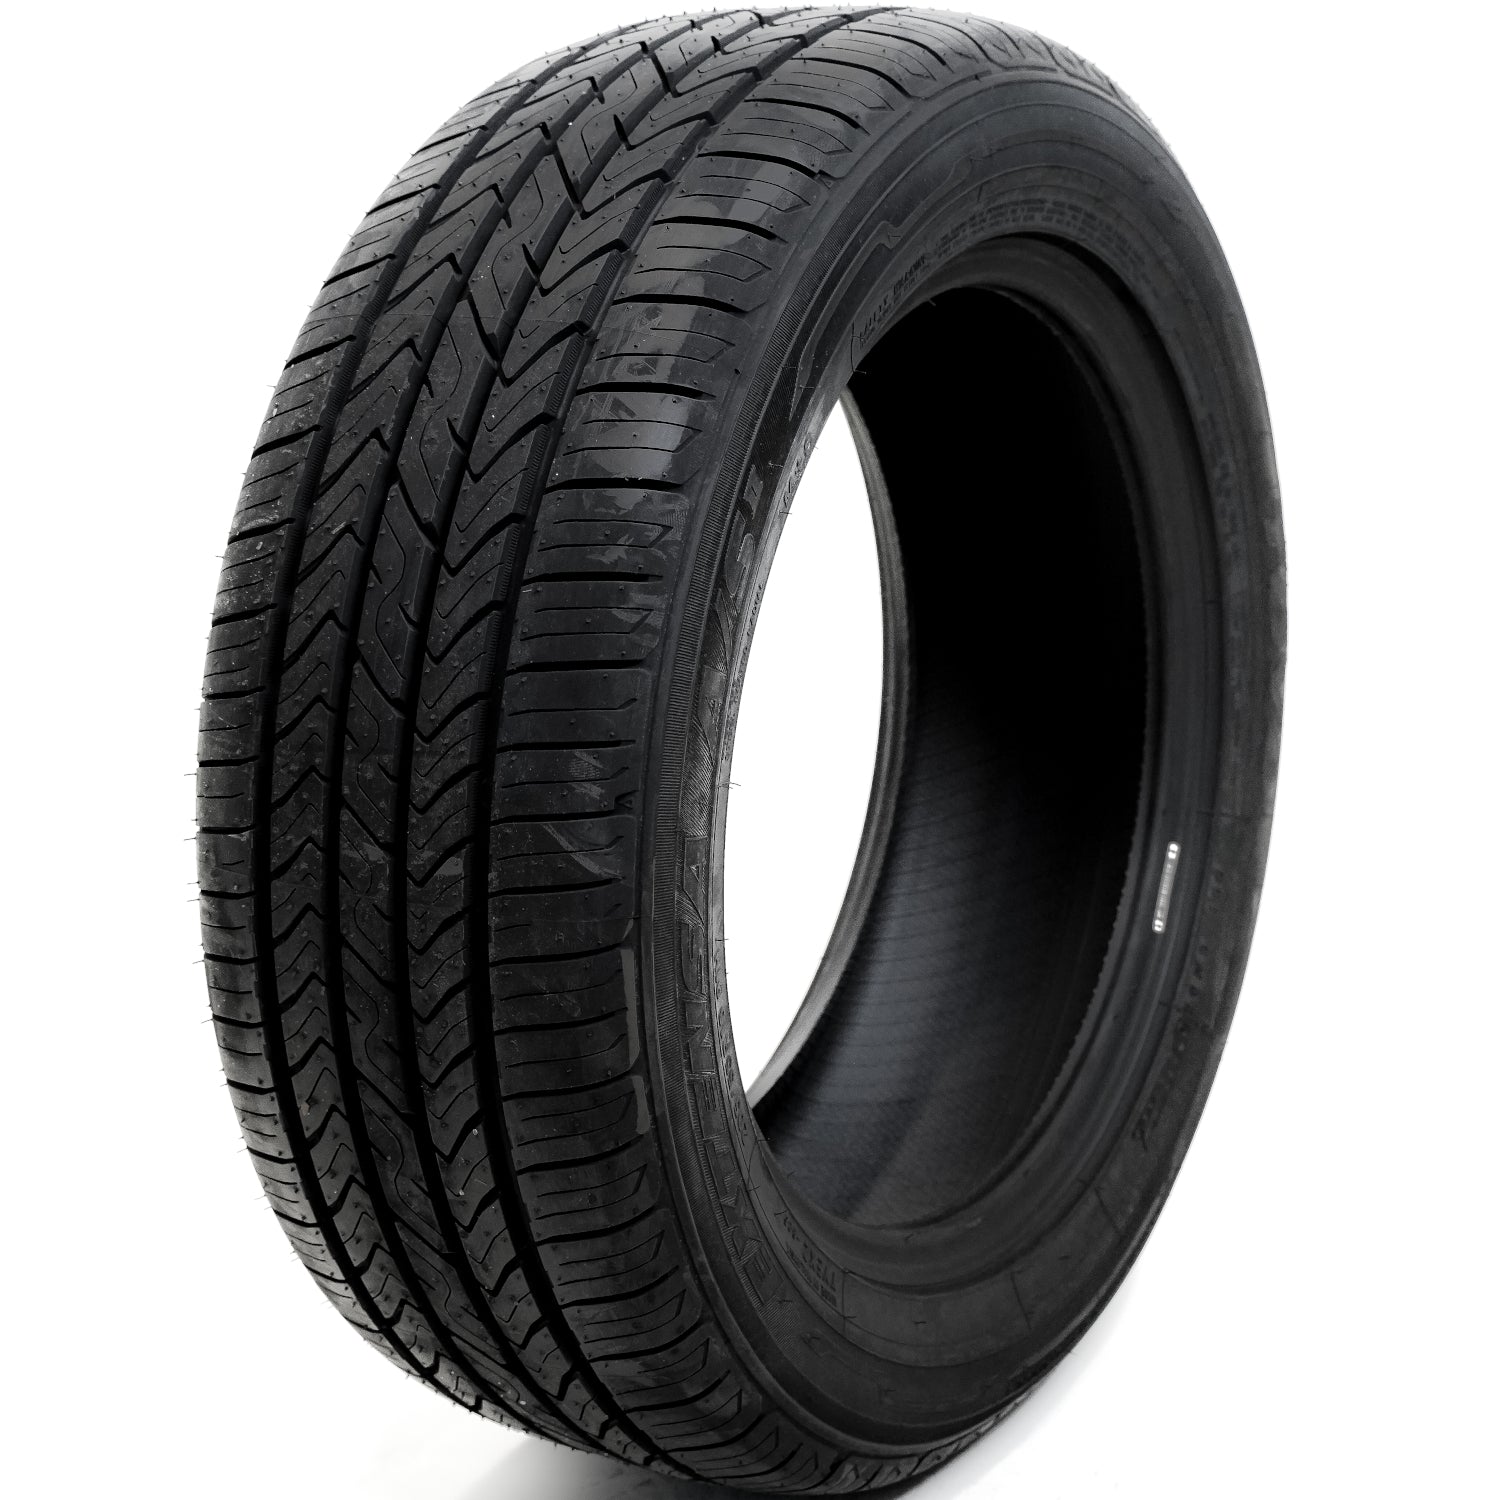 TOYO TIRES EXTENSA A/S II 215/60R16 (26.1X8.5R 16) Tires